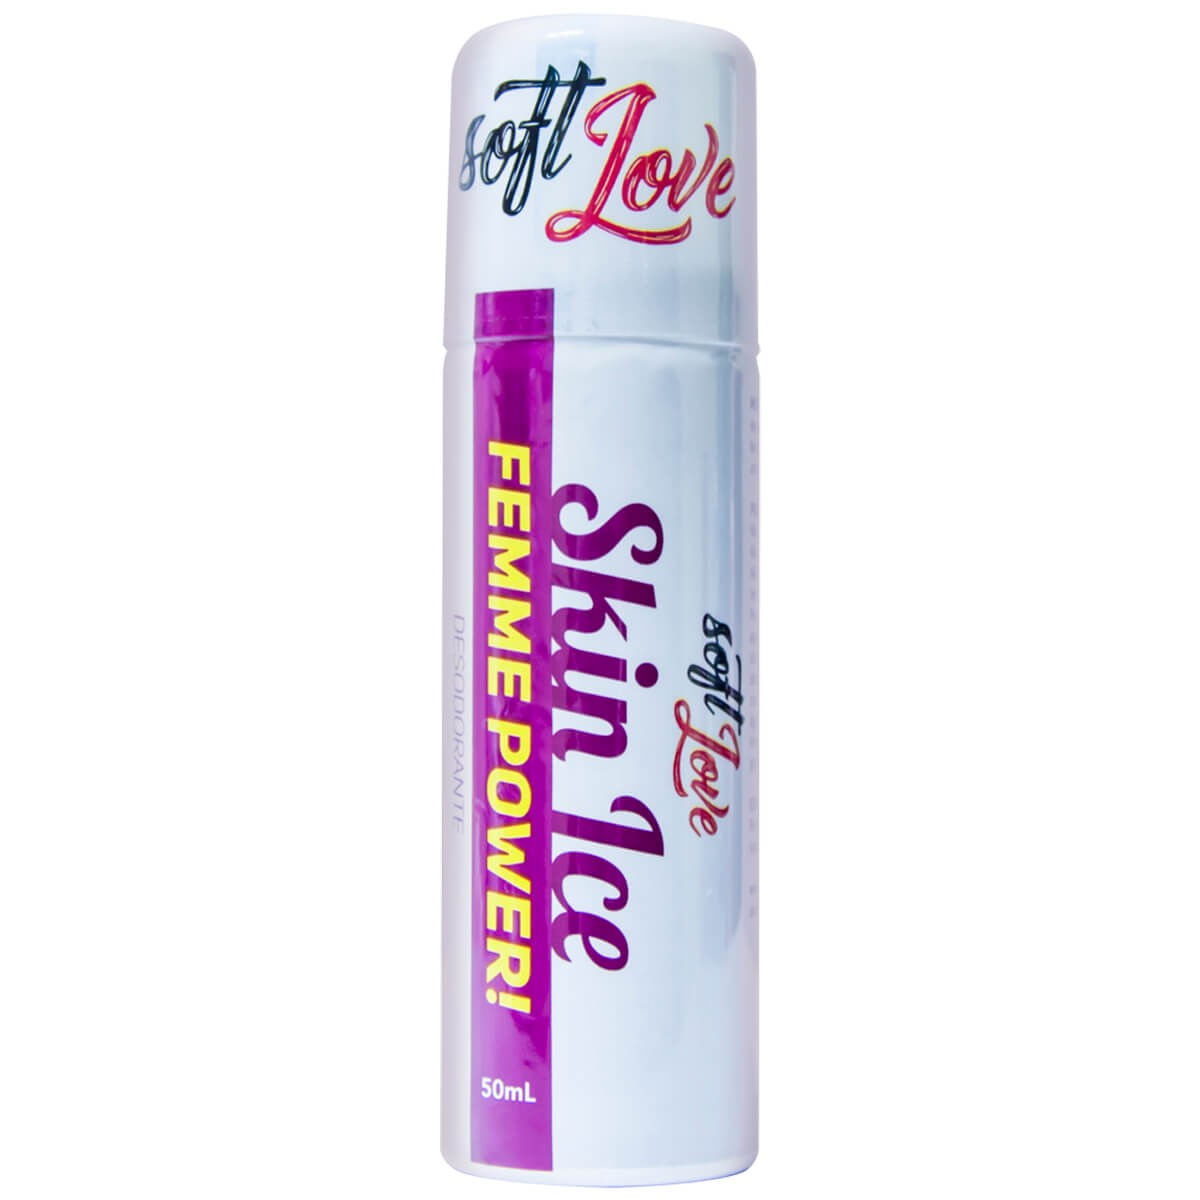 Skin Ice Femme Power Desodorante Ultra Refrescante 50ml Soft Love